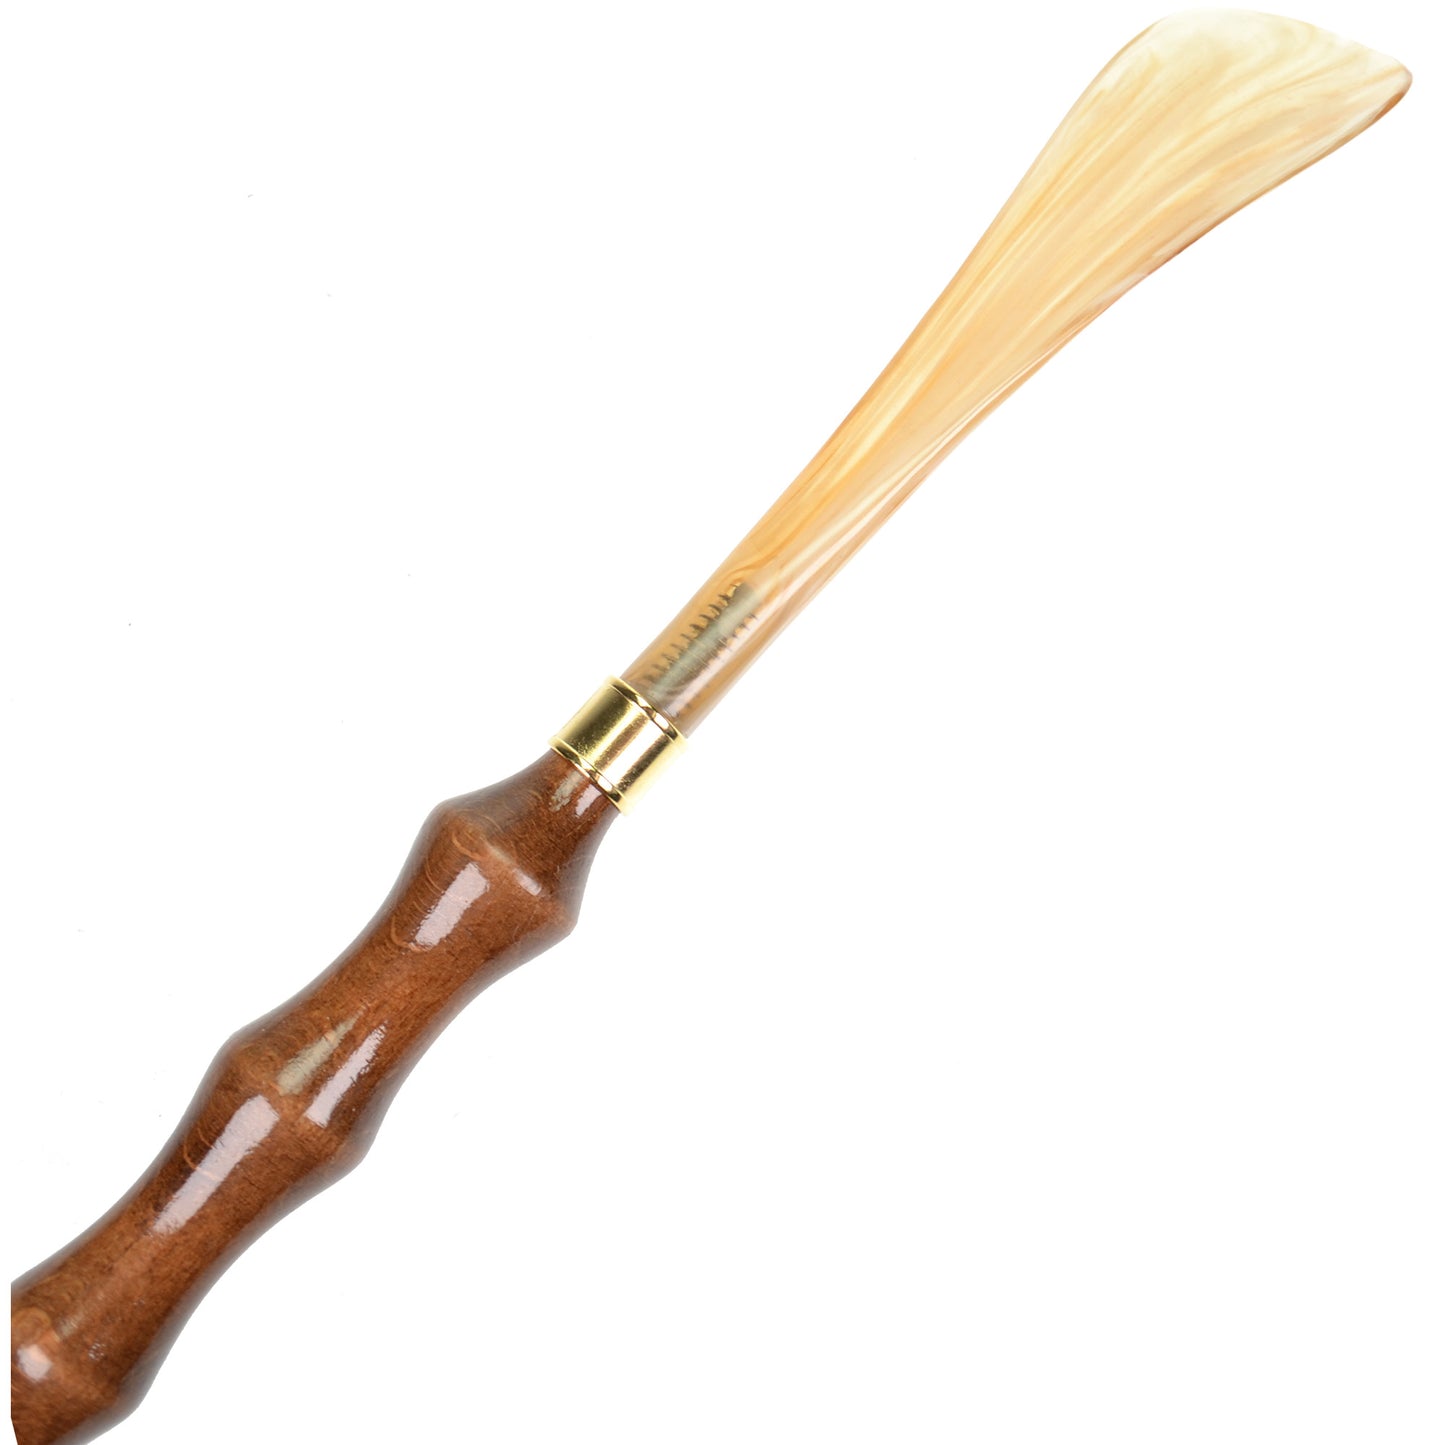 zNatoo Shoe Horn & Hand shaped Backscratcher - Dark Wood with Flocked Hand